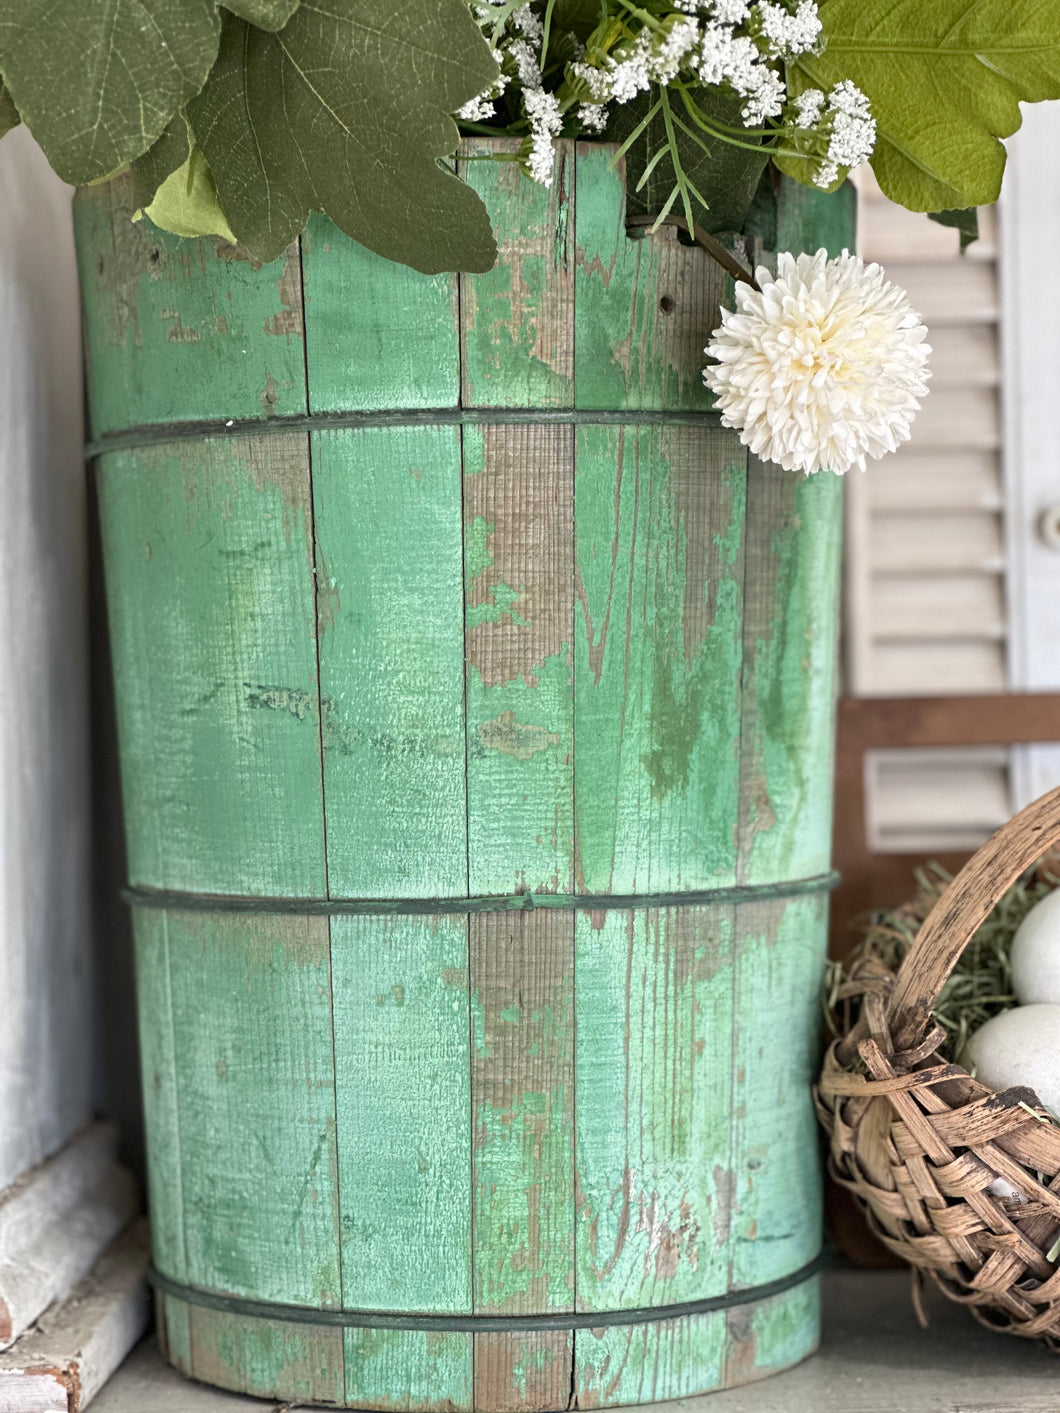 amazing vintage green wooden ice cream bucket, no handle or insides